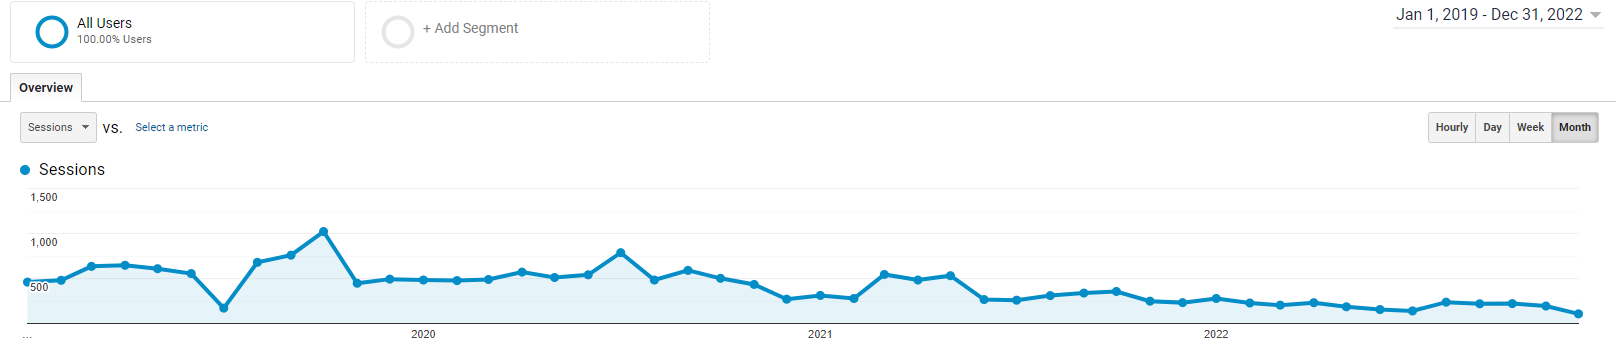 google analytics chart showing monthly traffic